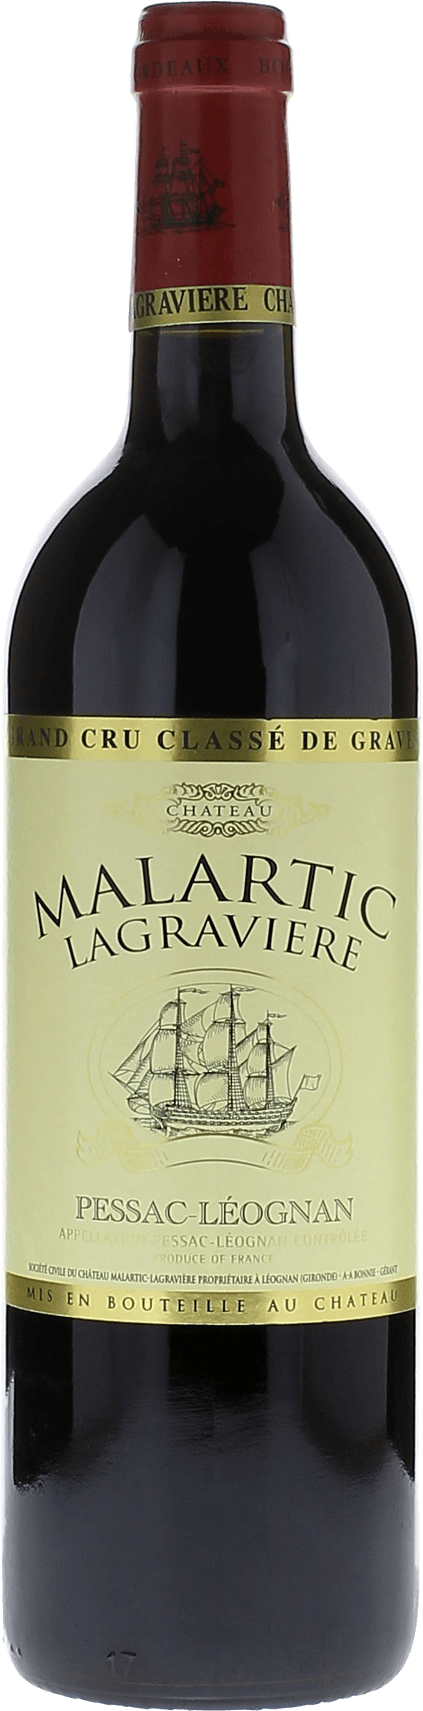 Malartic lagraviere rouge 1961 Grand Cru Class Graves, Bordeaux rouge